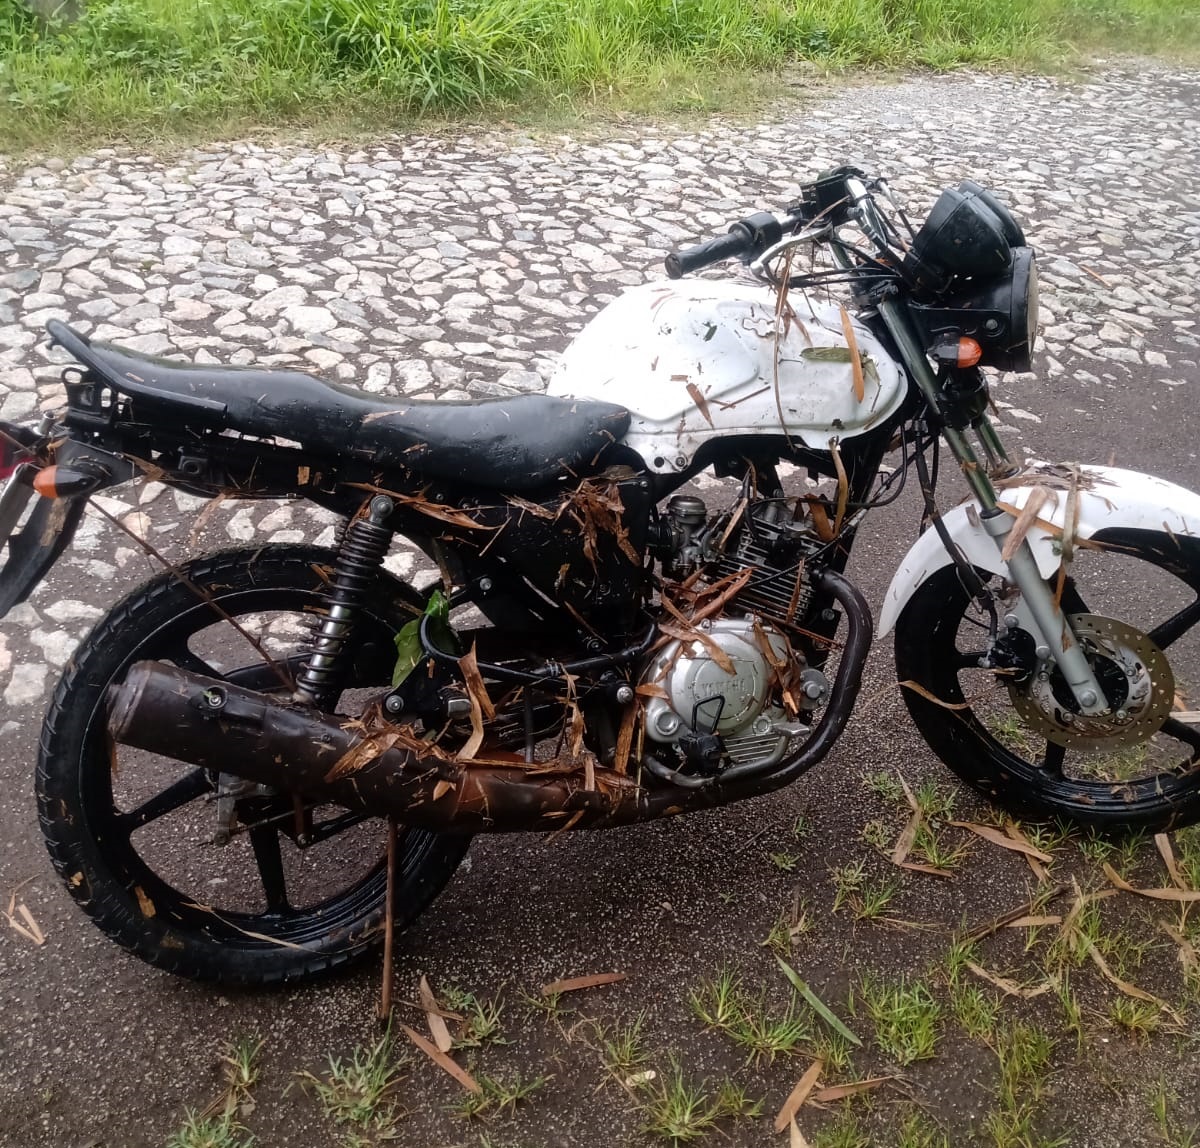 Motocicleta furtada na Rua XV de Novembro é recuperada e suspeito preso pela Polícia Civil